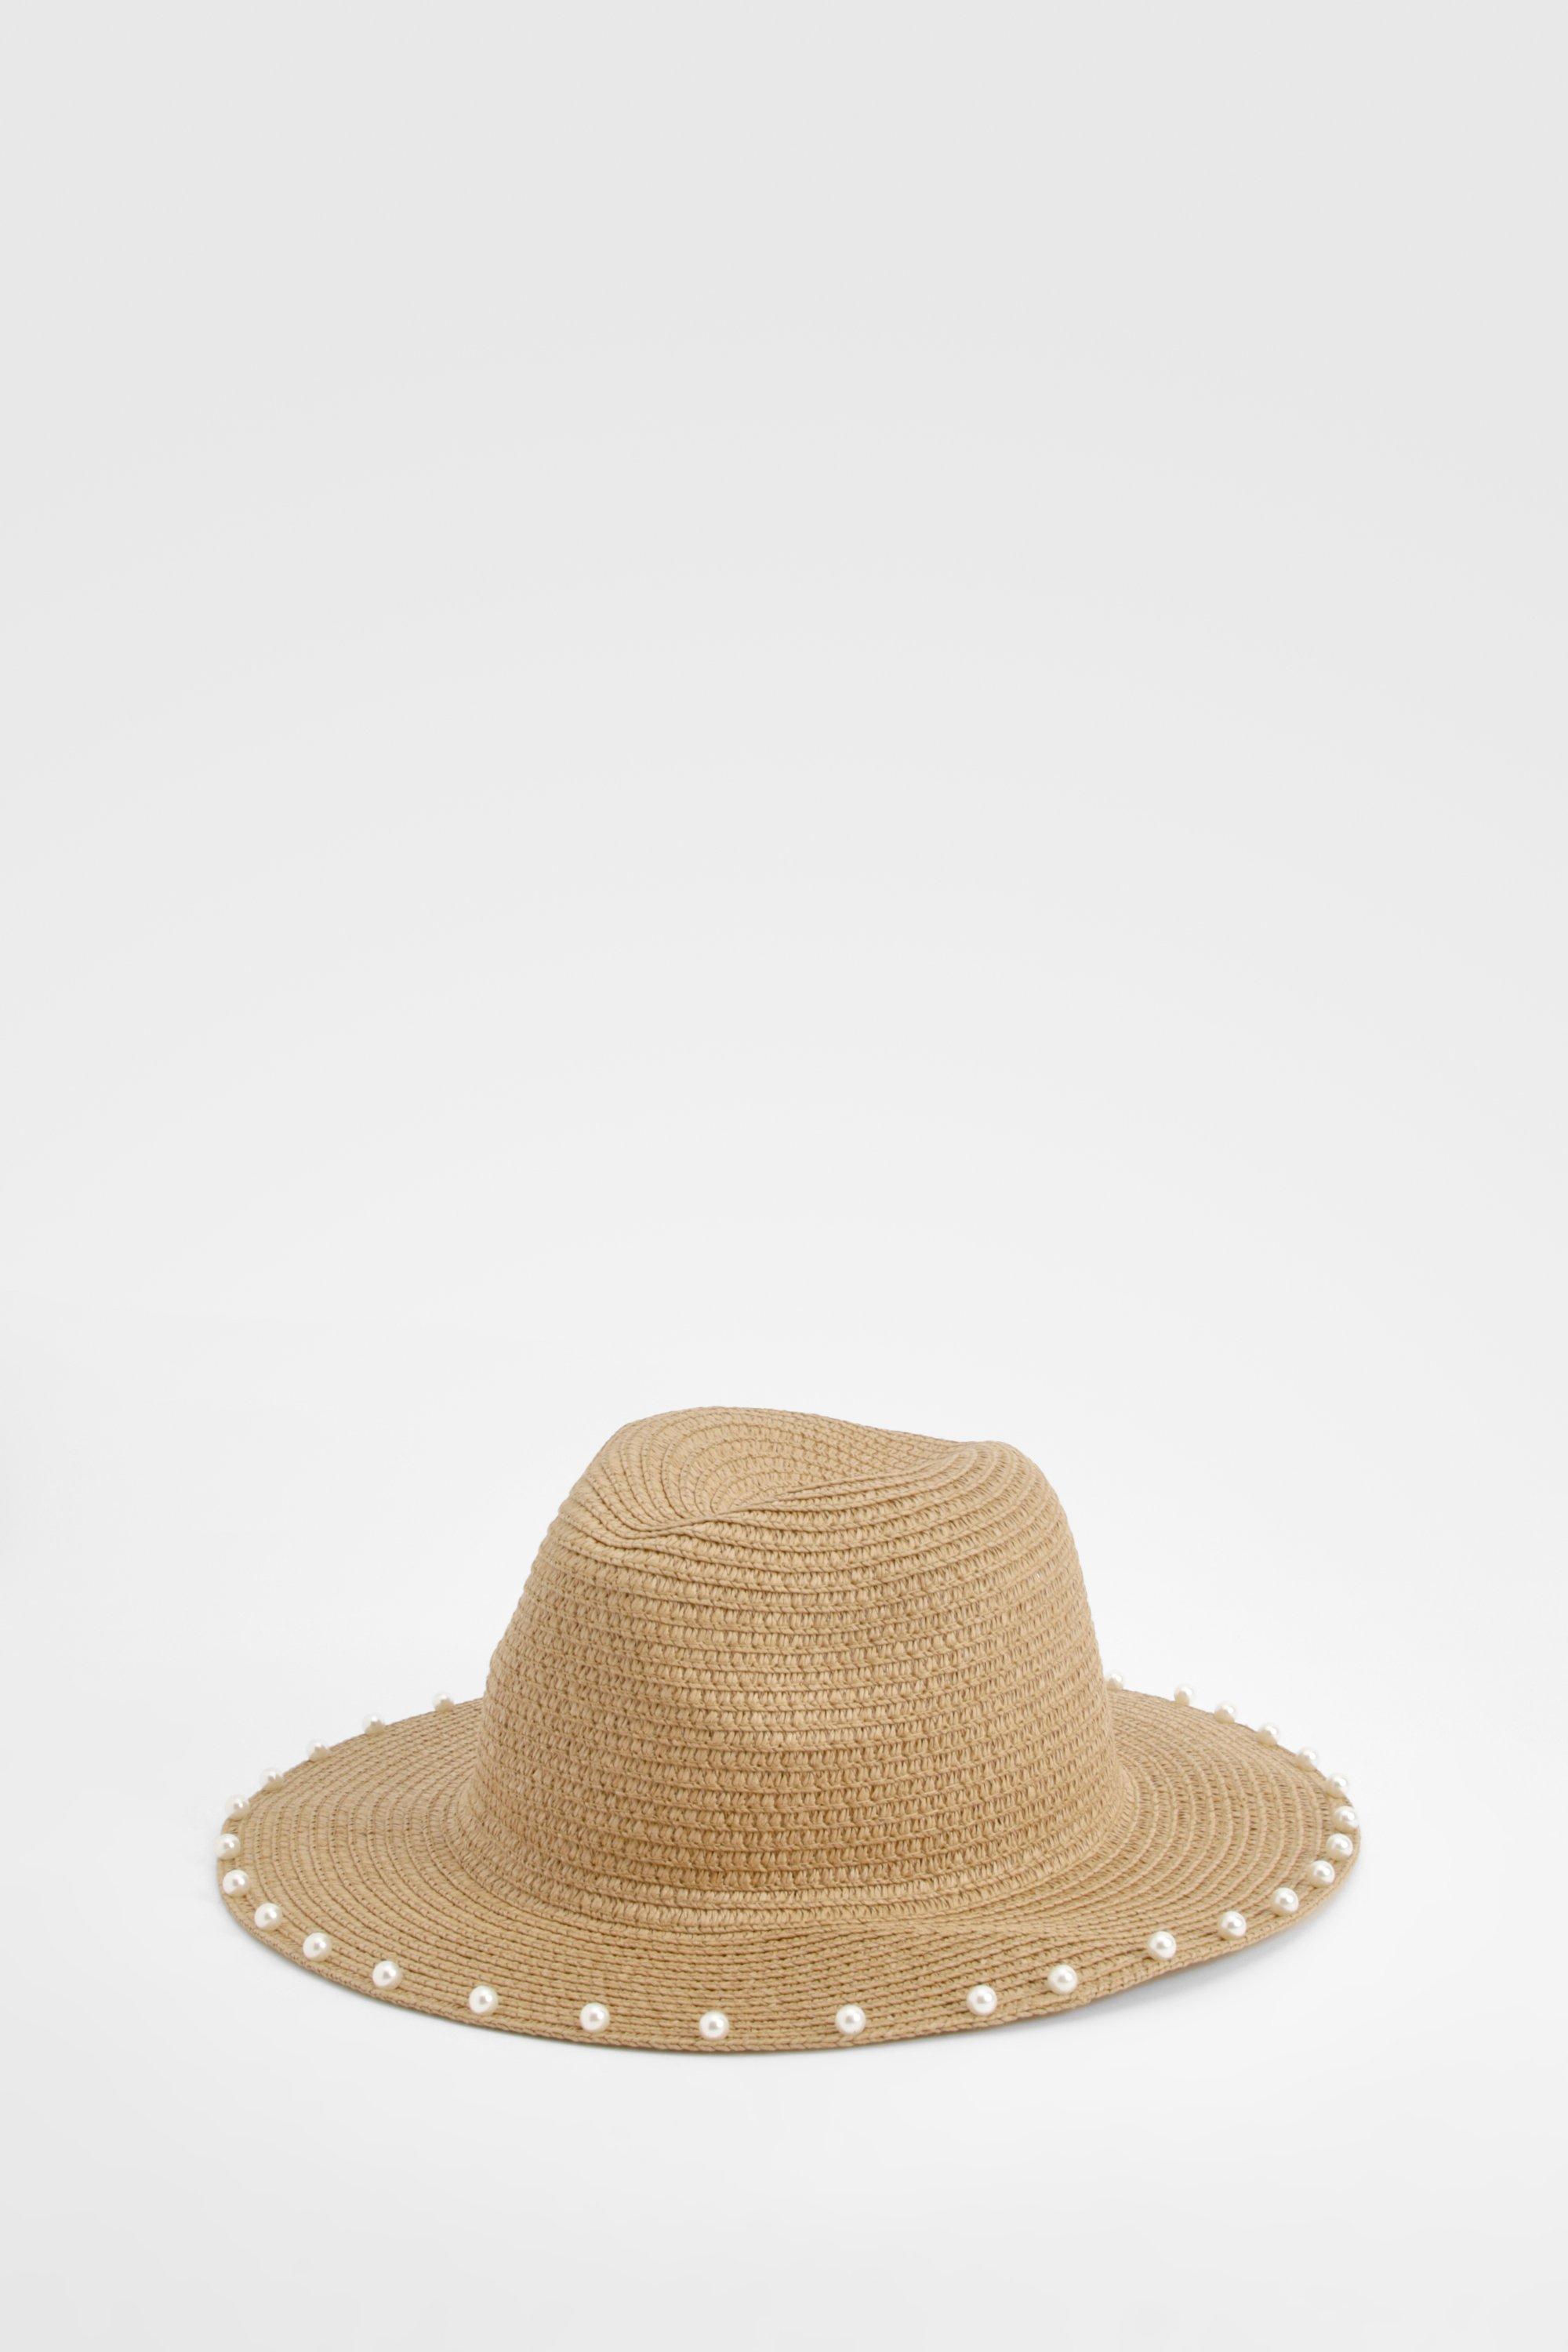 Image of Pearl Trim Straw Hat, Tan